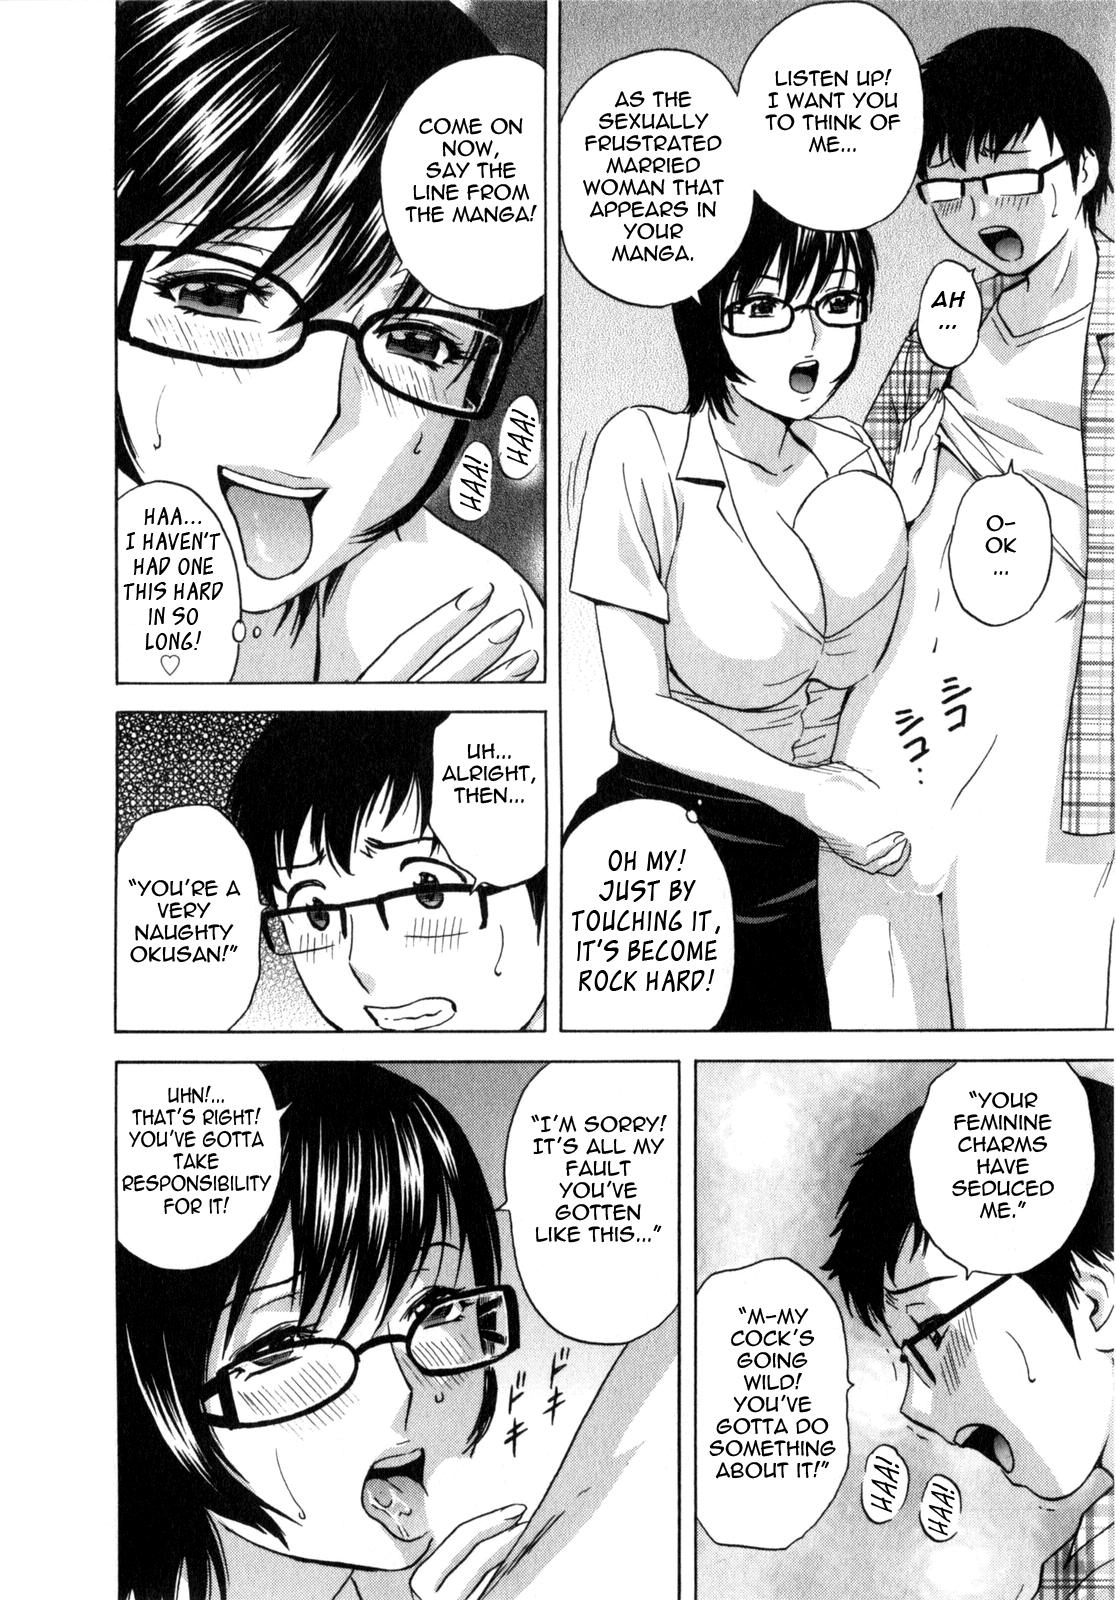 [Hidemaru] Life with Married Women Just Like a Manga 1 - Ch. 1-9 [English] {Tadanohito} 112